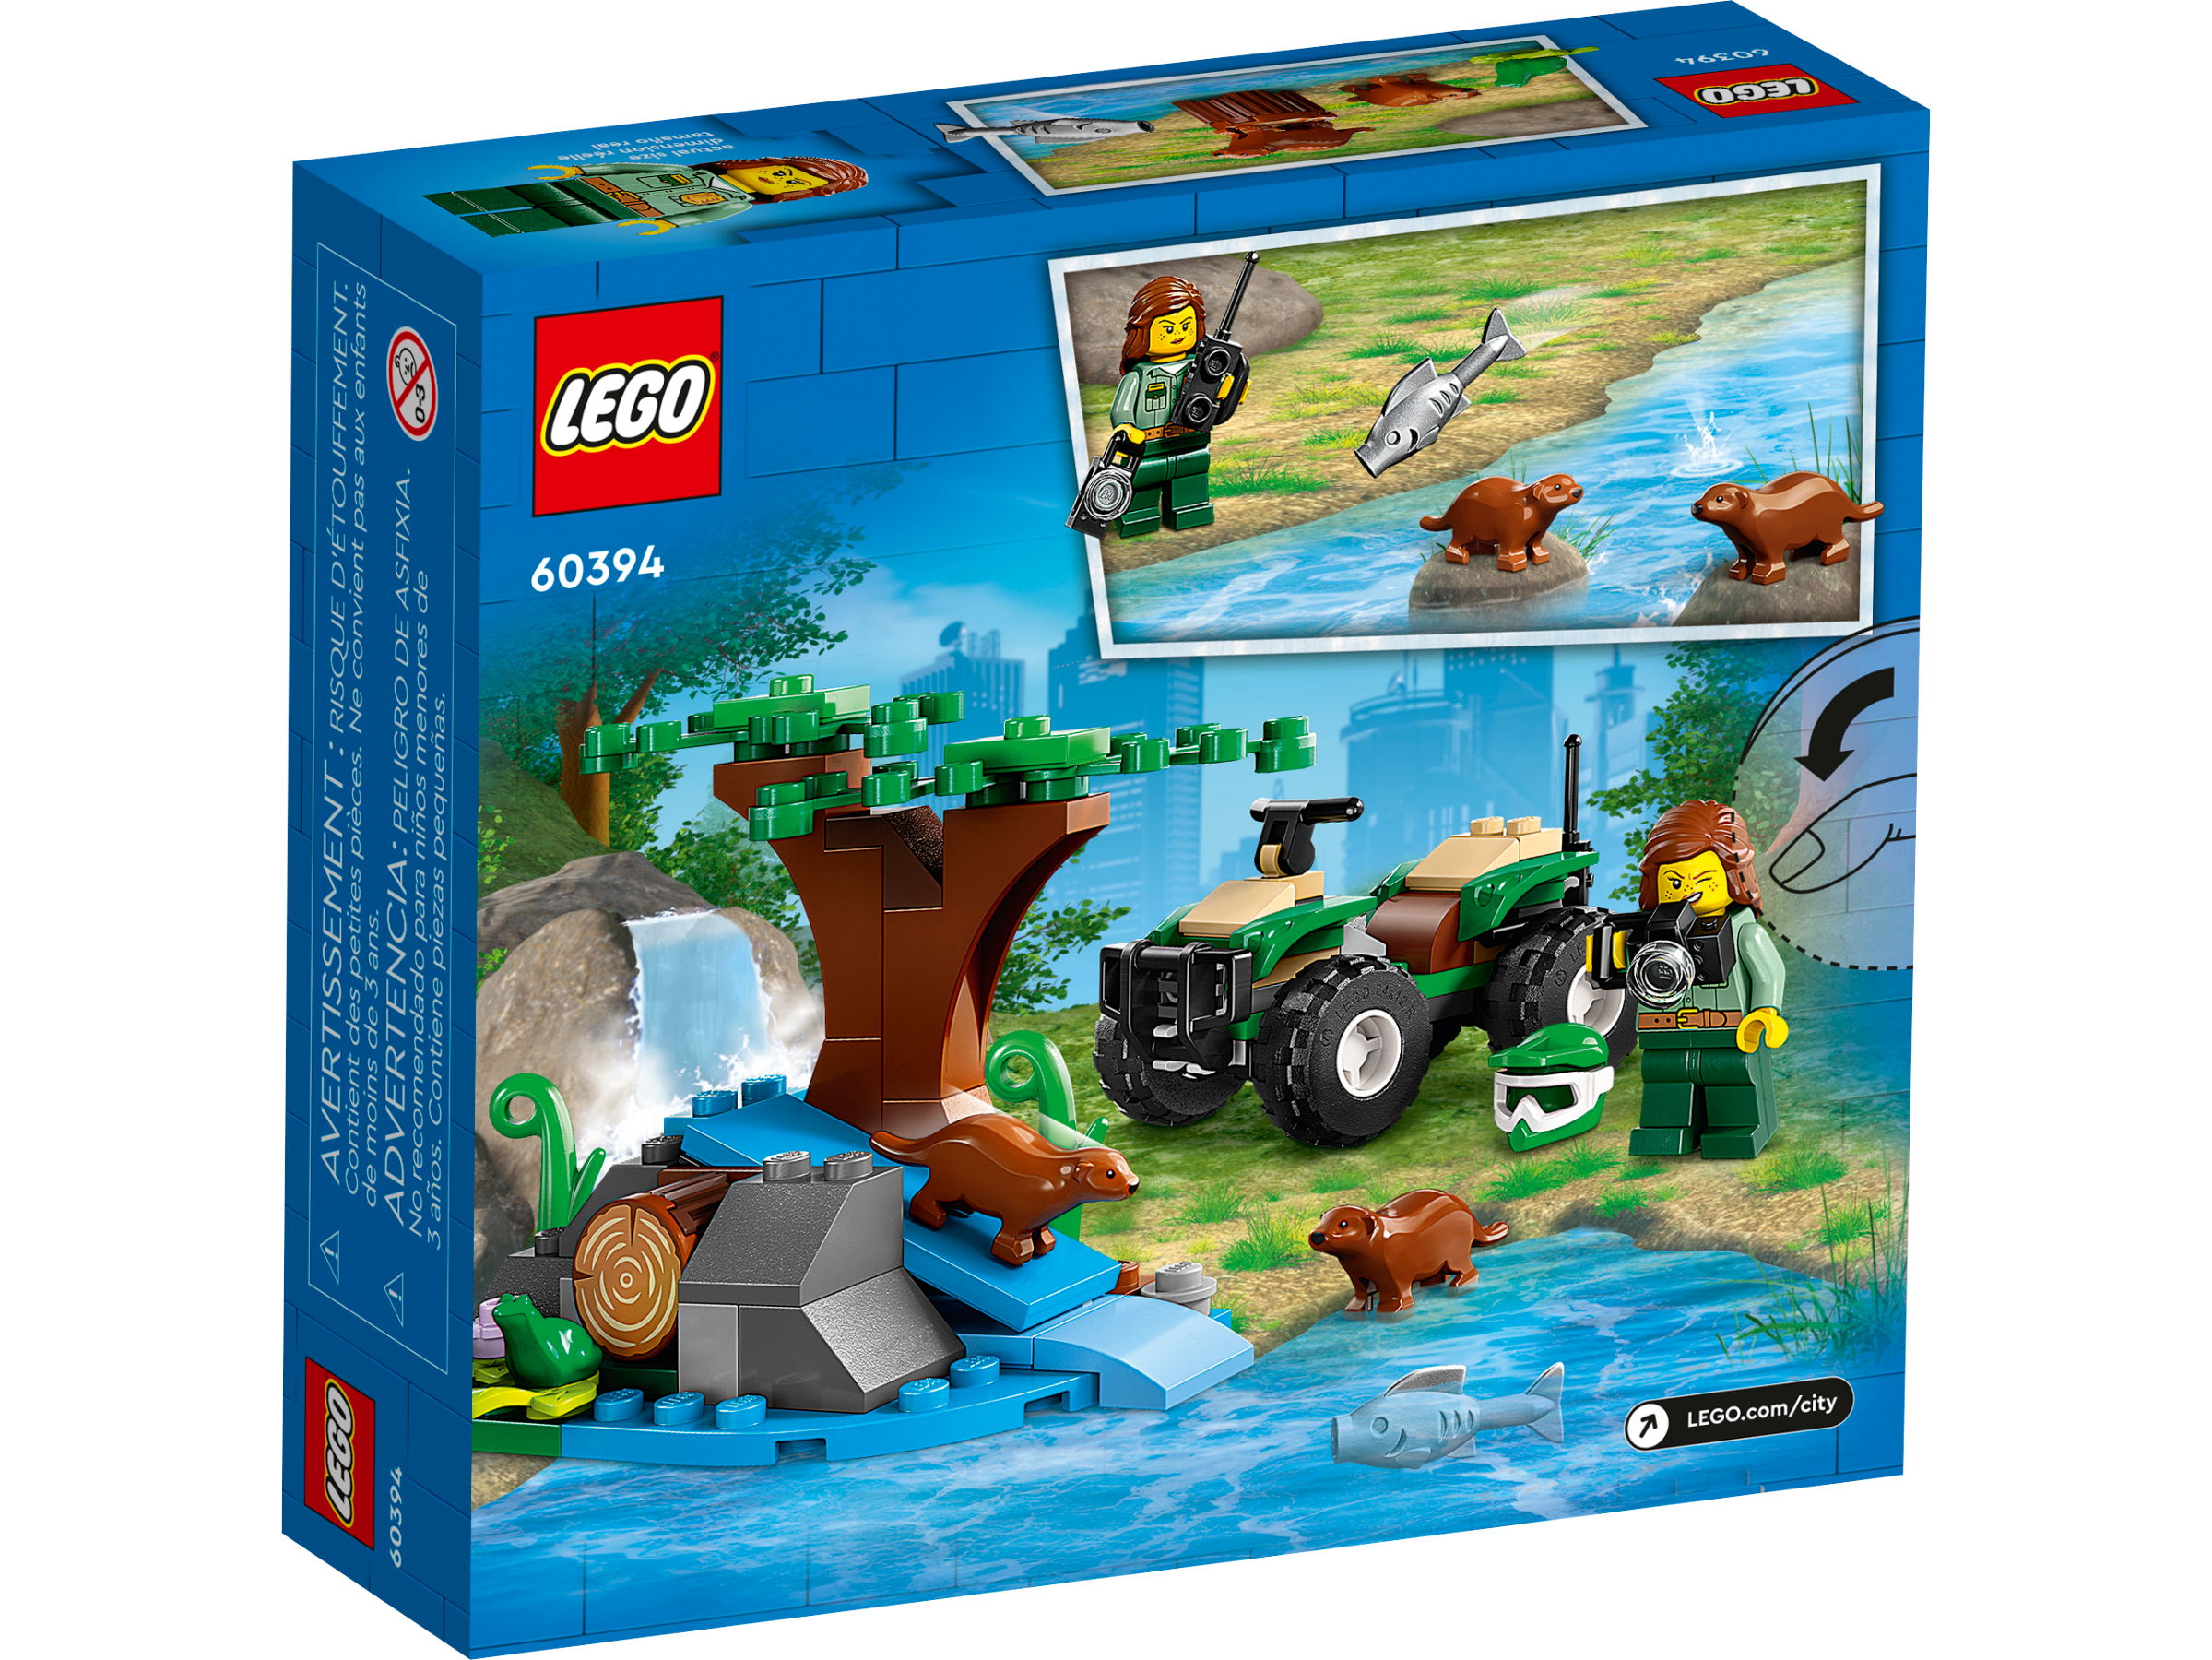 LEGO City: ATV and Otter Habitat